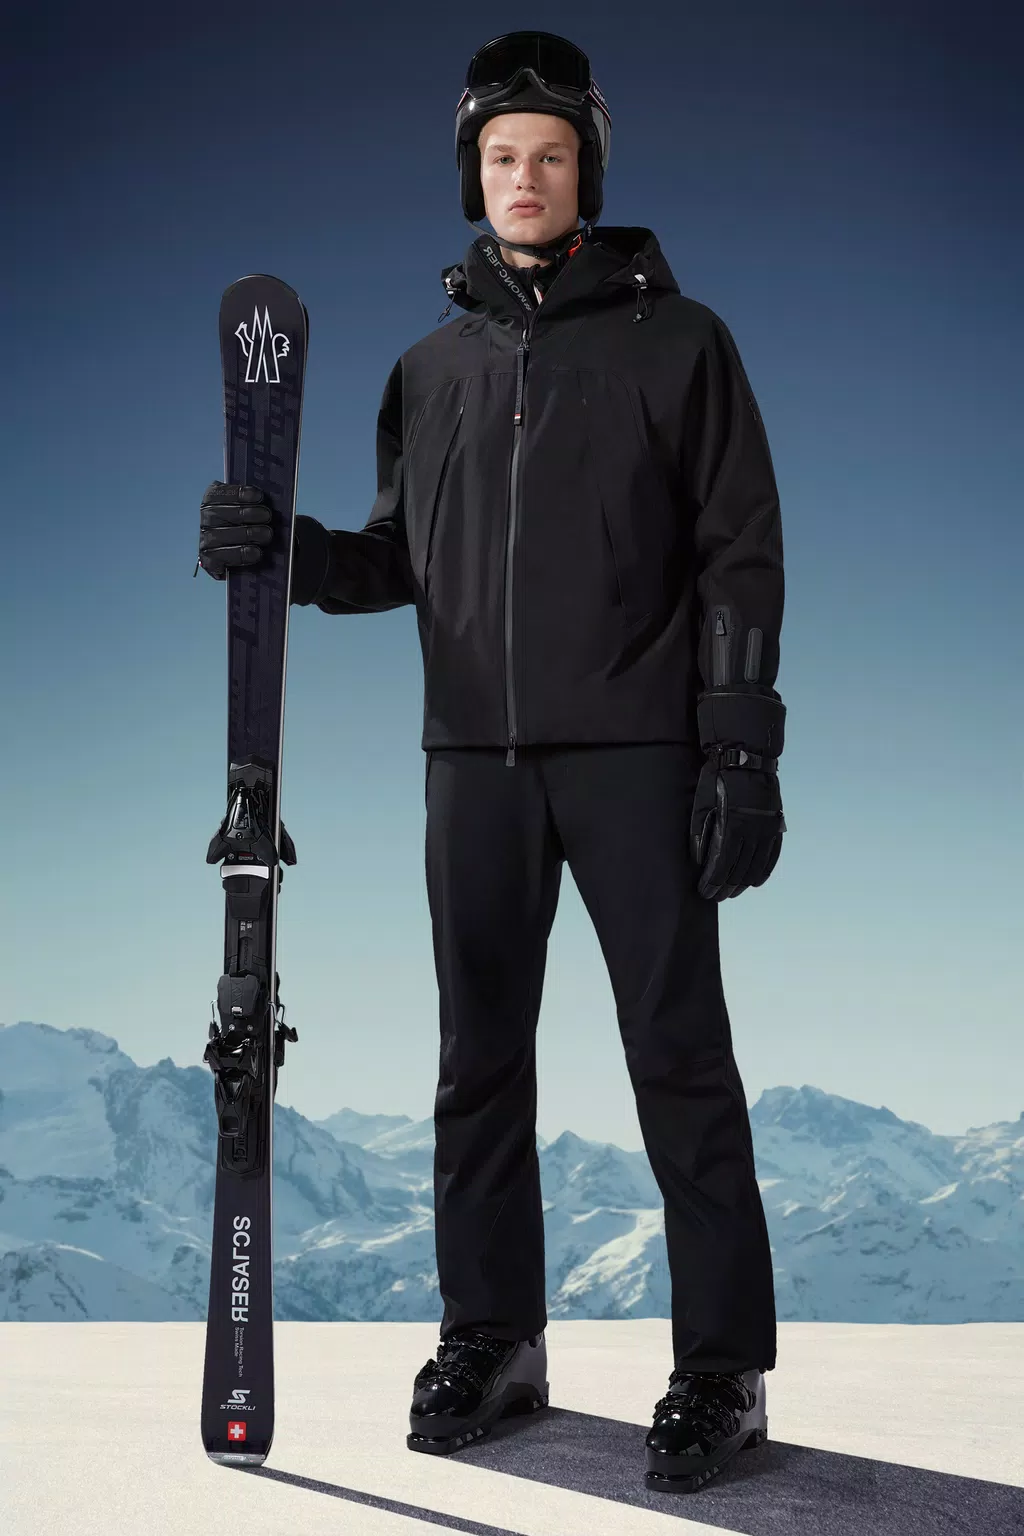 Lapaz Ski-Jacke Herren Schwarz Moncler 1